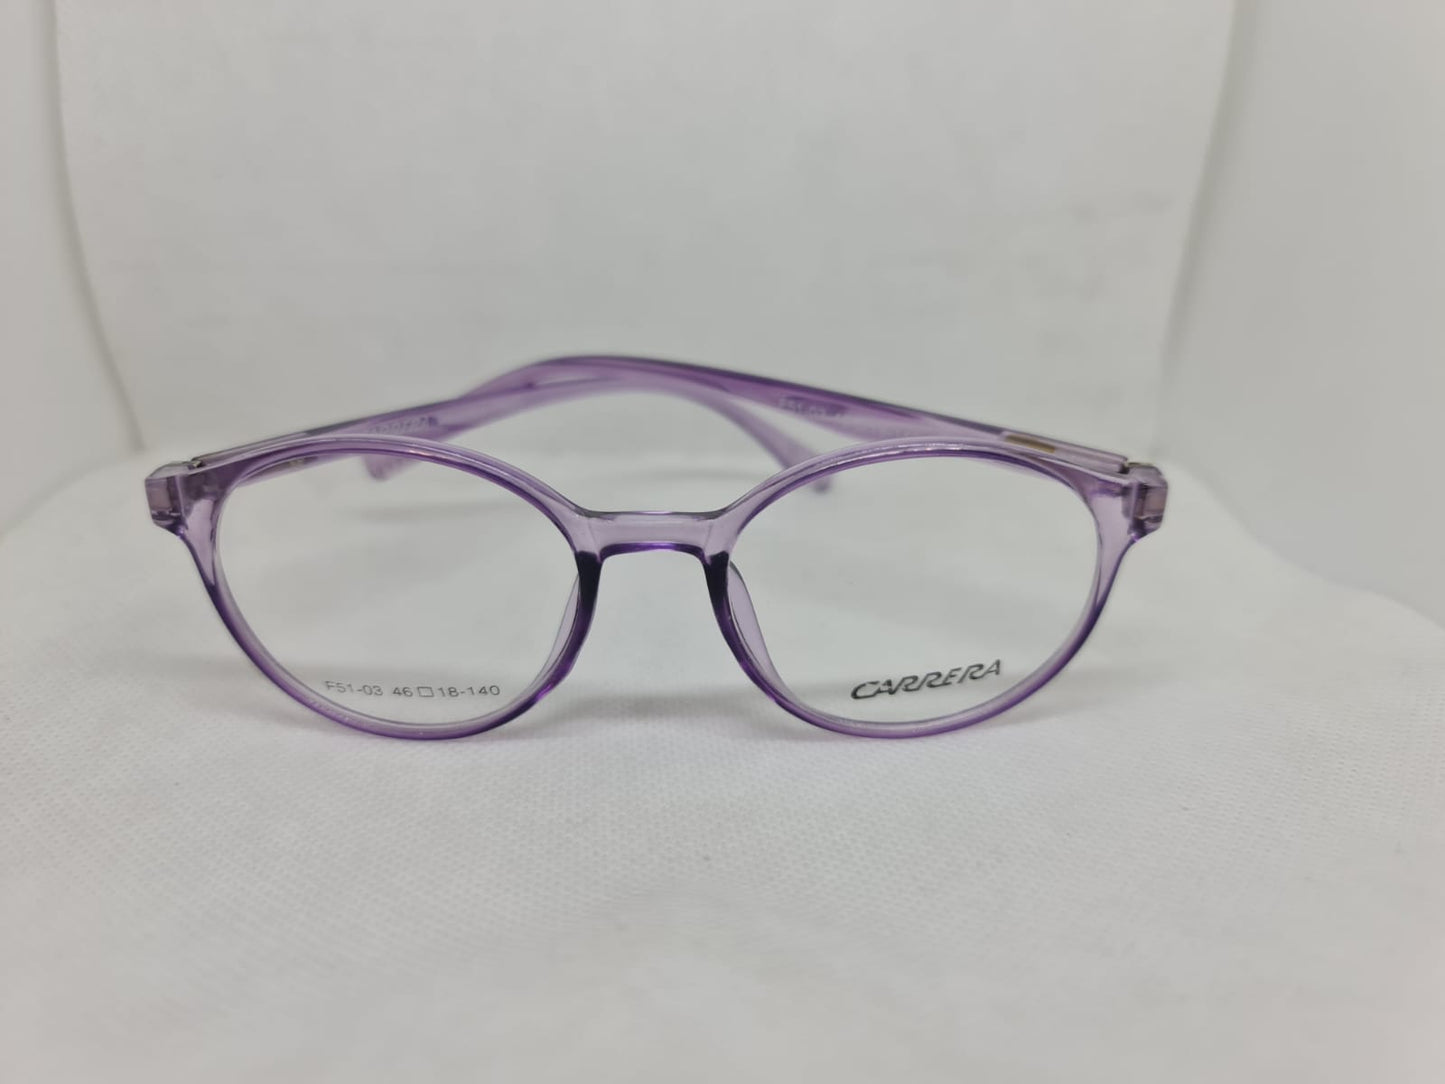 Carrera Glasses